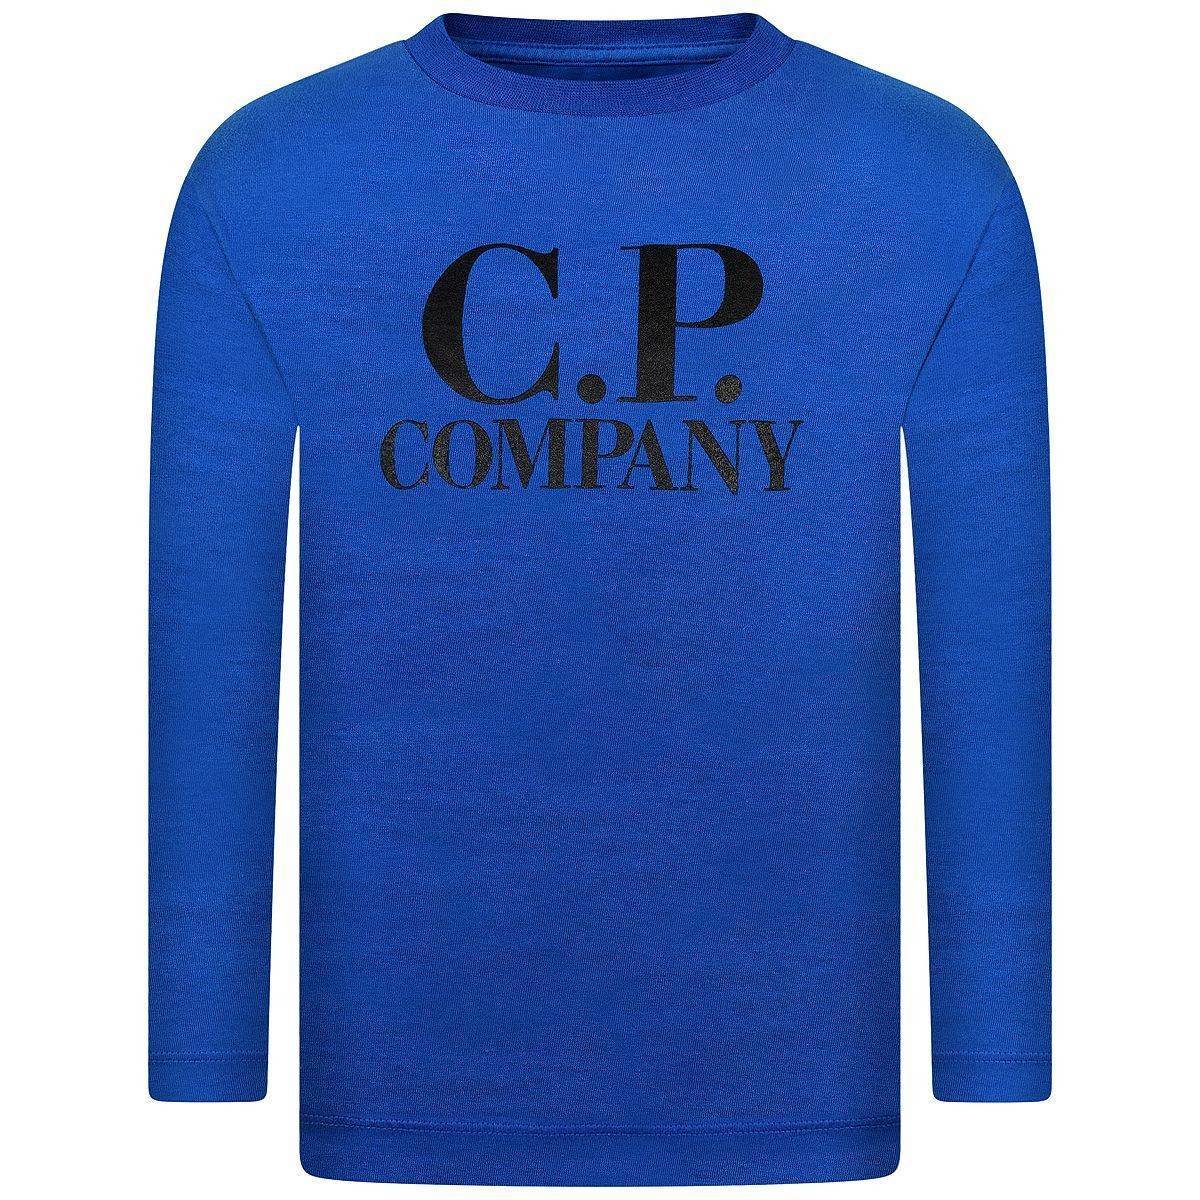 Who Has a Blue P Logo - C.P. Company Boys Blue Logo Top With Hood Print